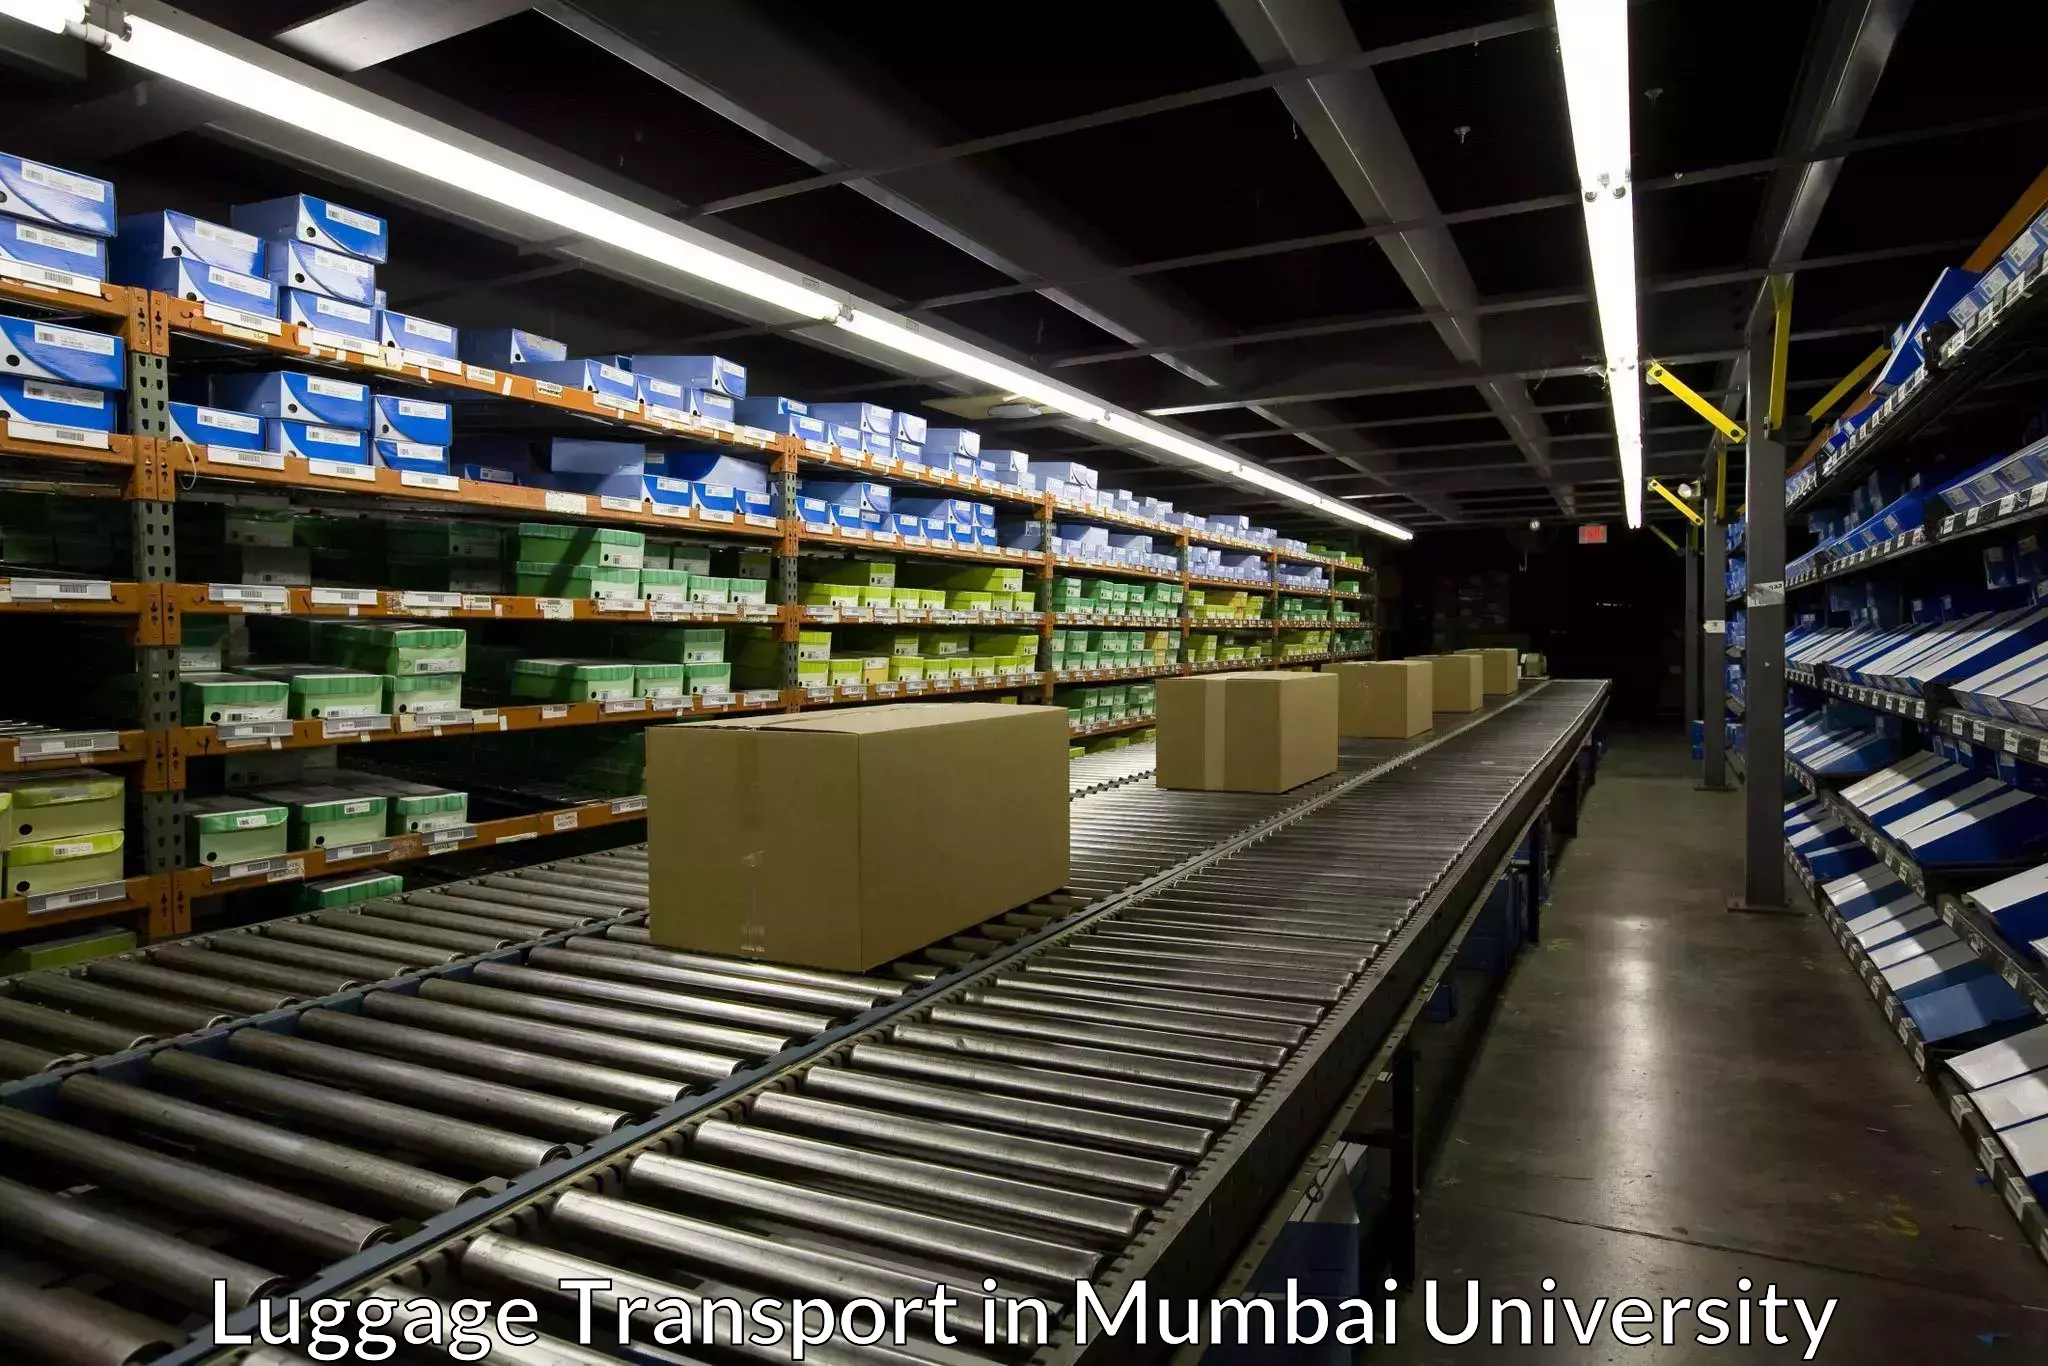 Baggage transport coordination in Mumbai University